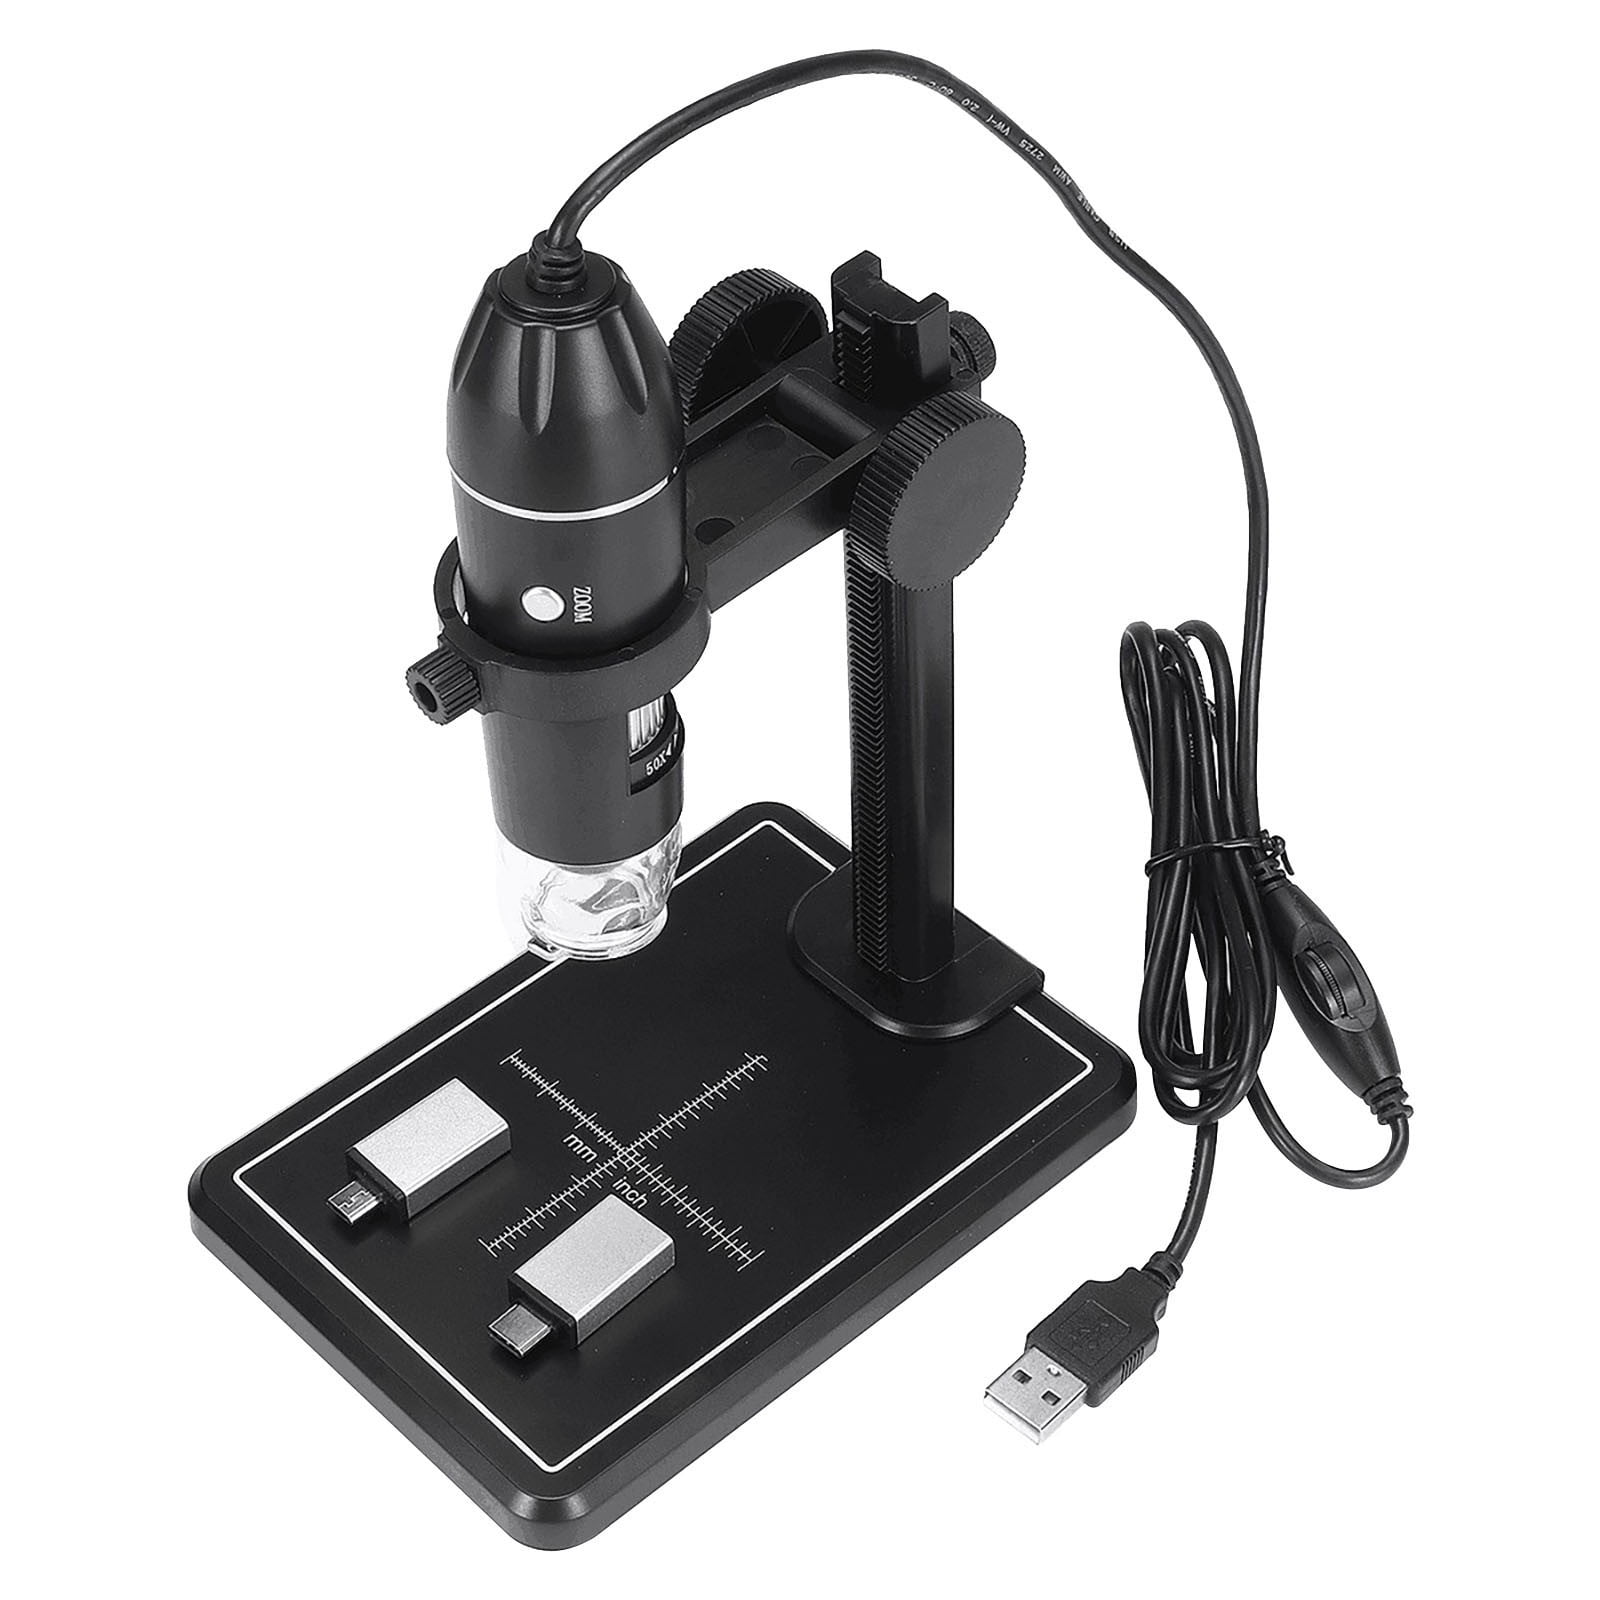 USB Digital Microscope 1600X 8 LED Magnification Handheld